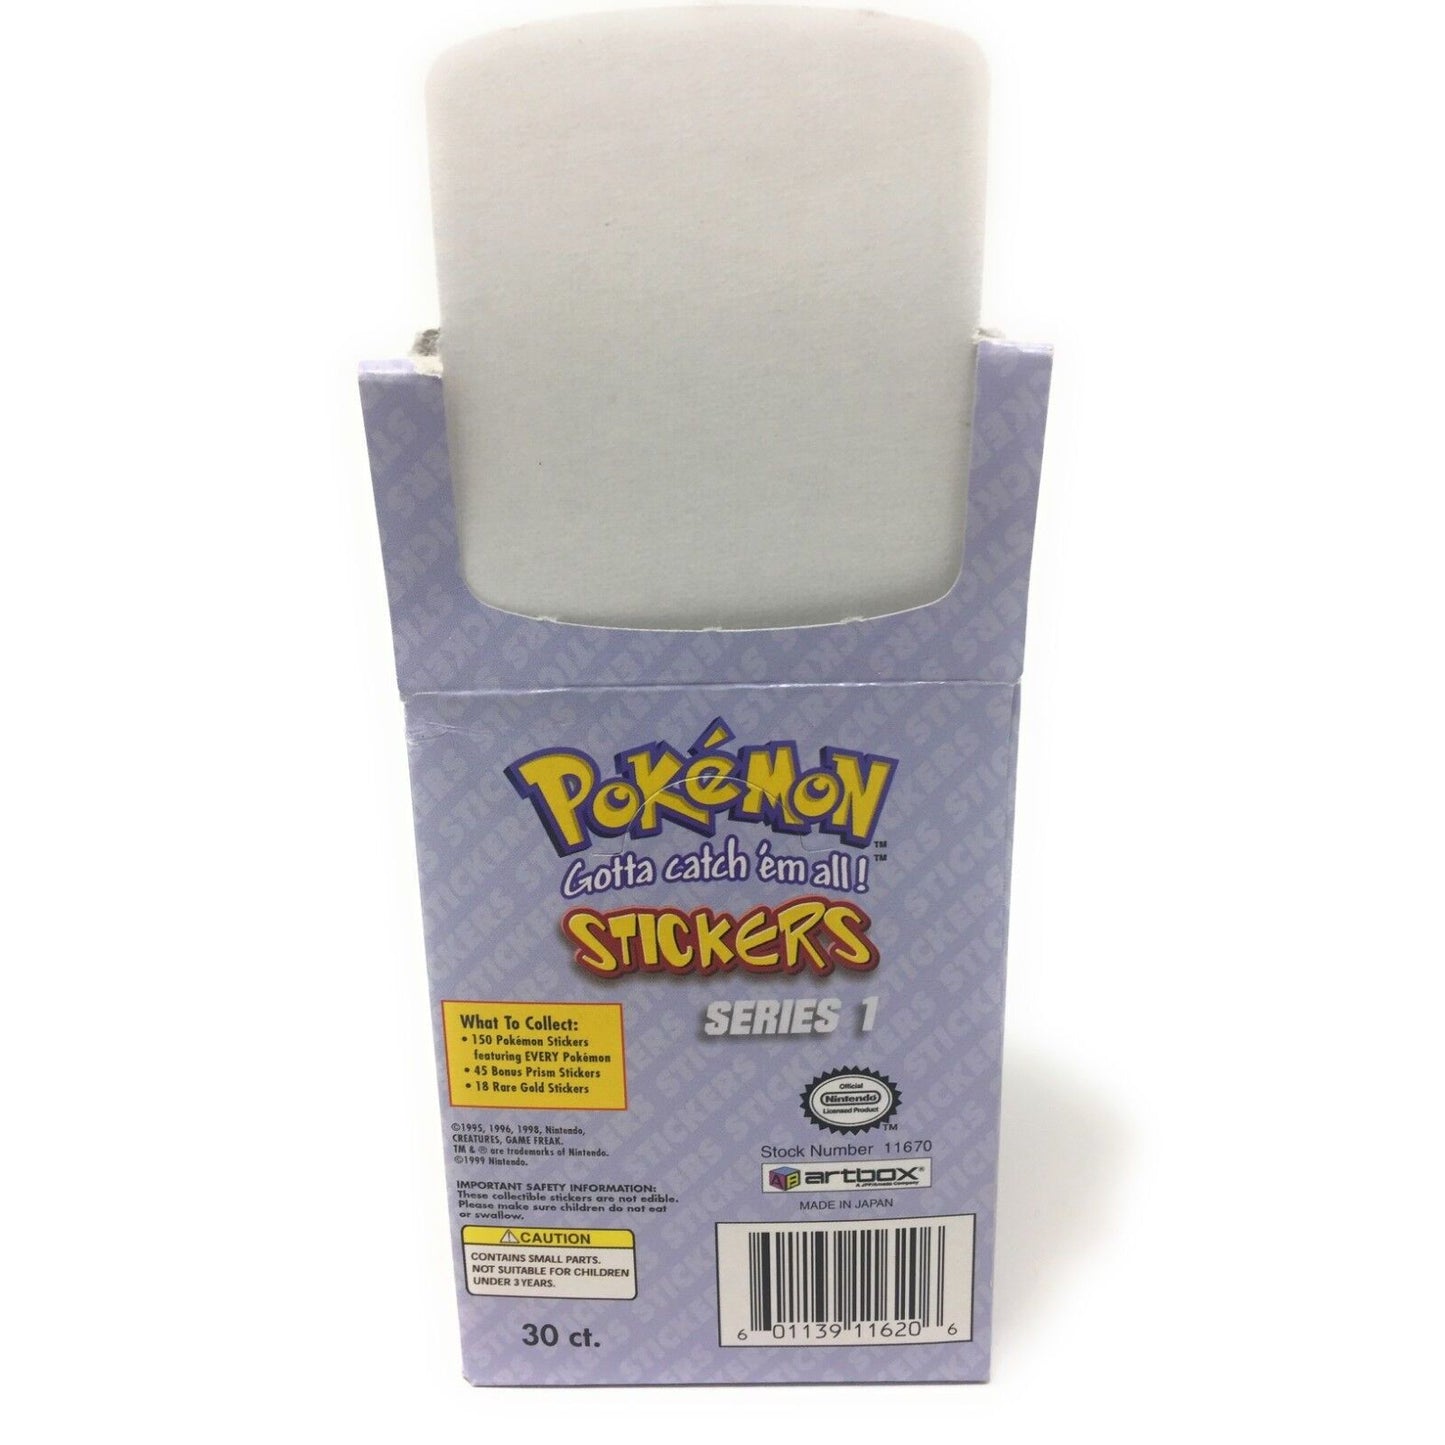 Pokemon Stickers Series 1 Box